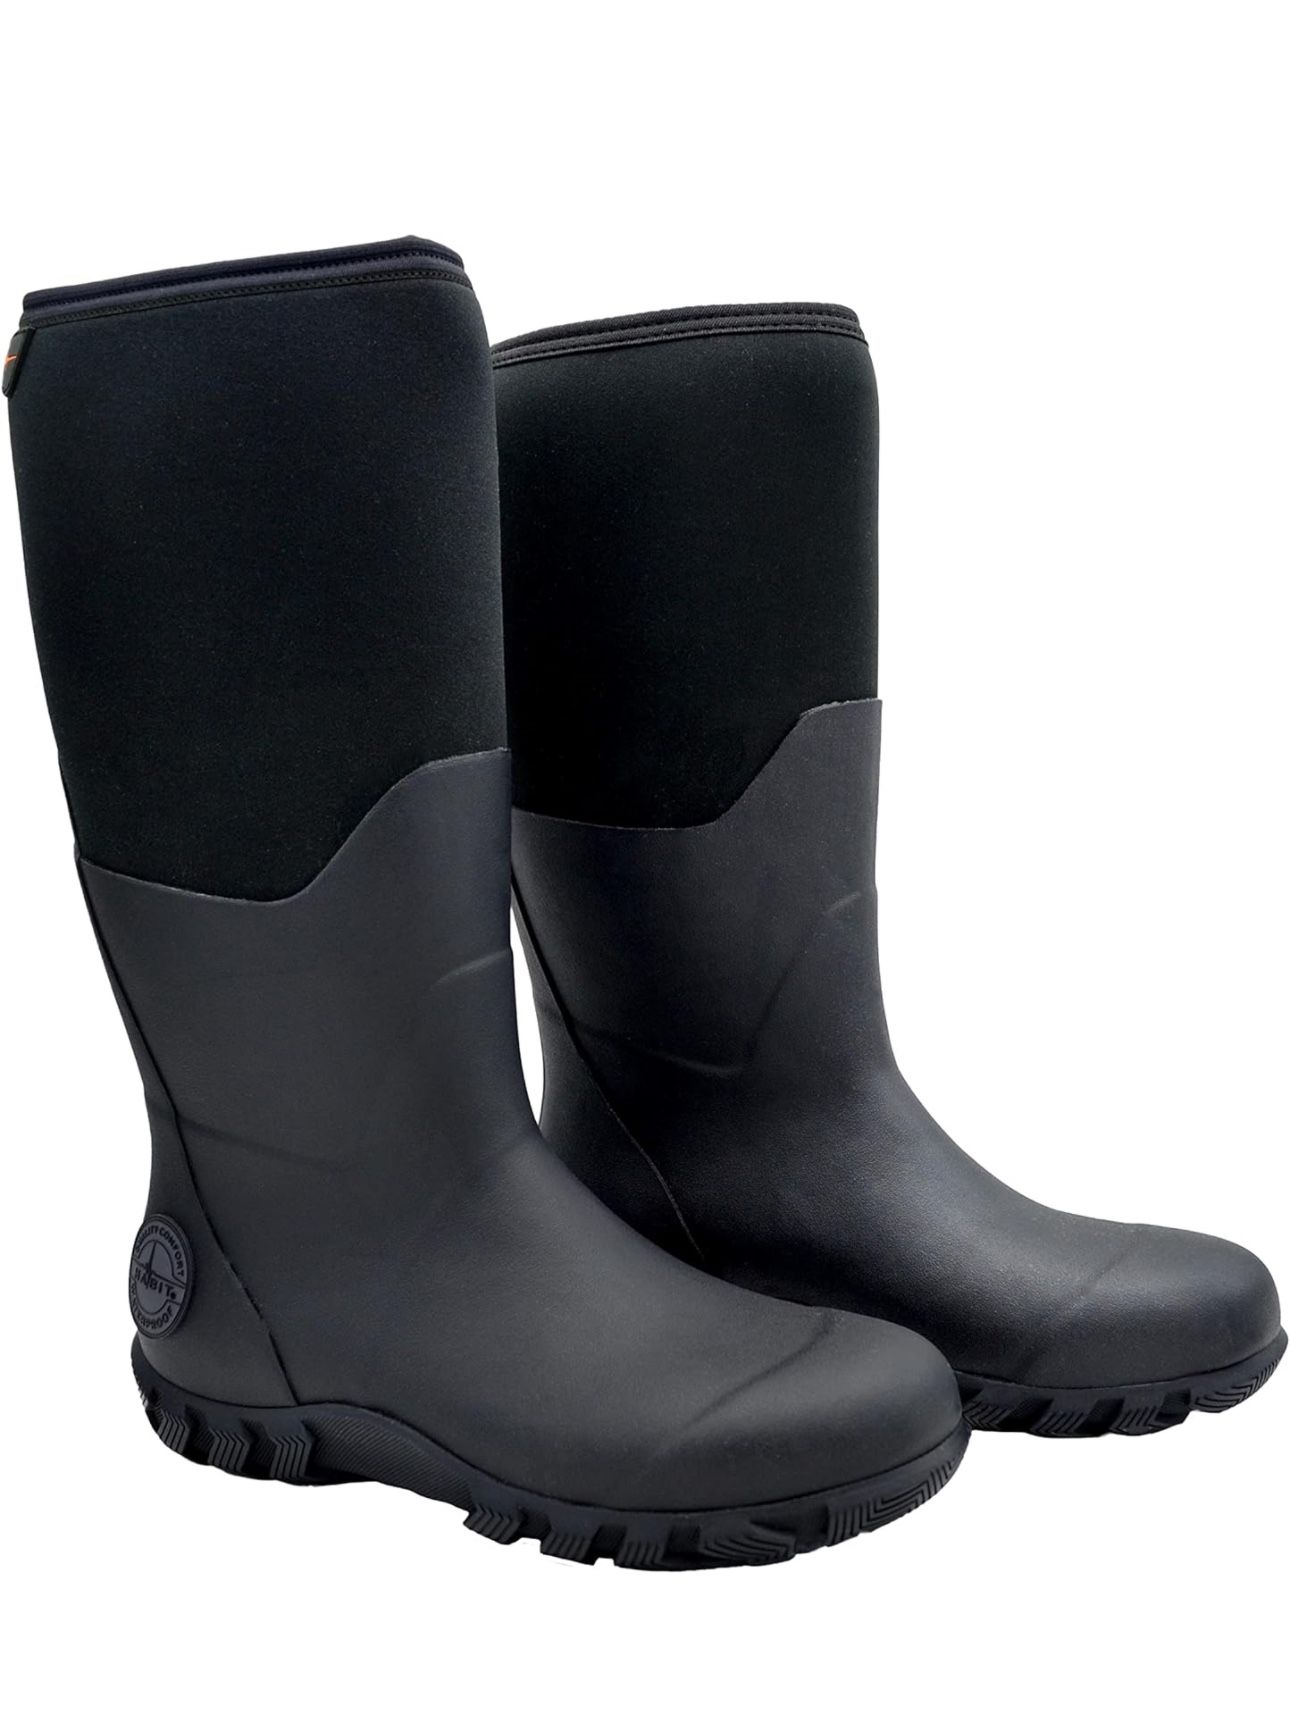 Habit Men’s 15" Waterproof All-Weather Rubber Boots